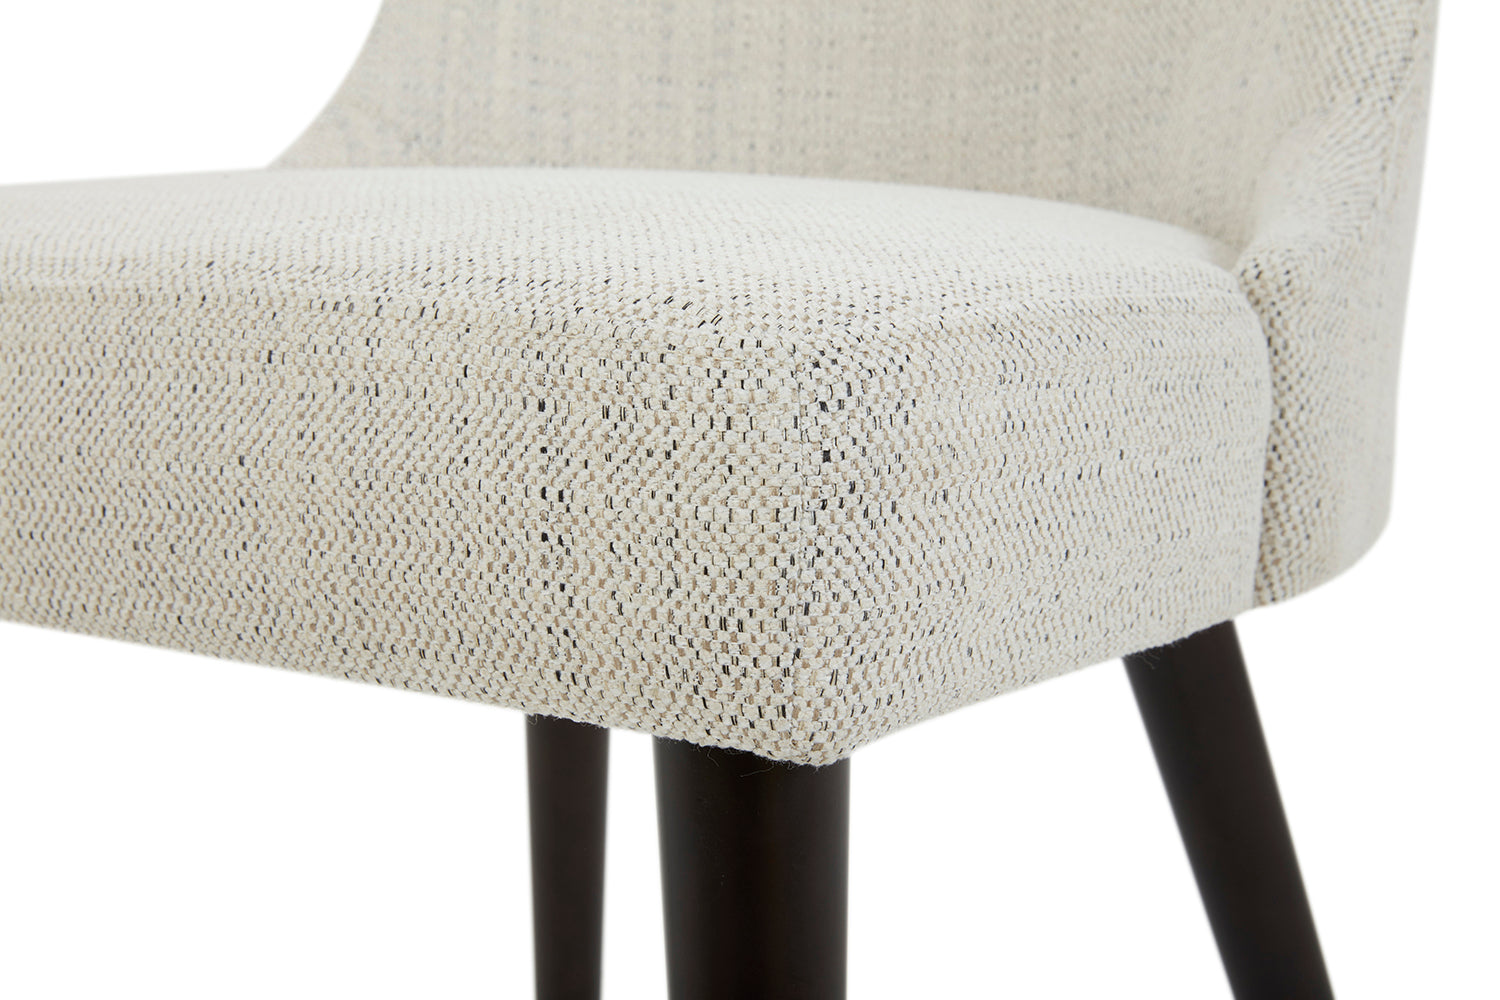 CHITA LIVING-Rhett Dining Chair (Set of 2)-Dining Chairs-Fabric-Ivory-